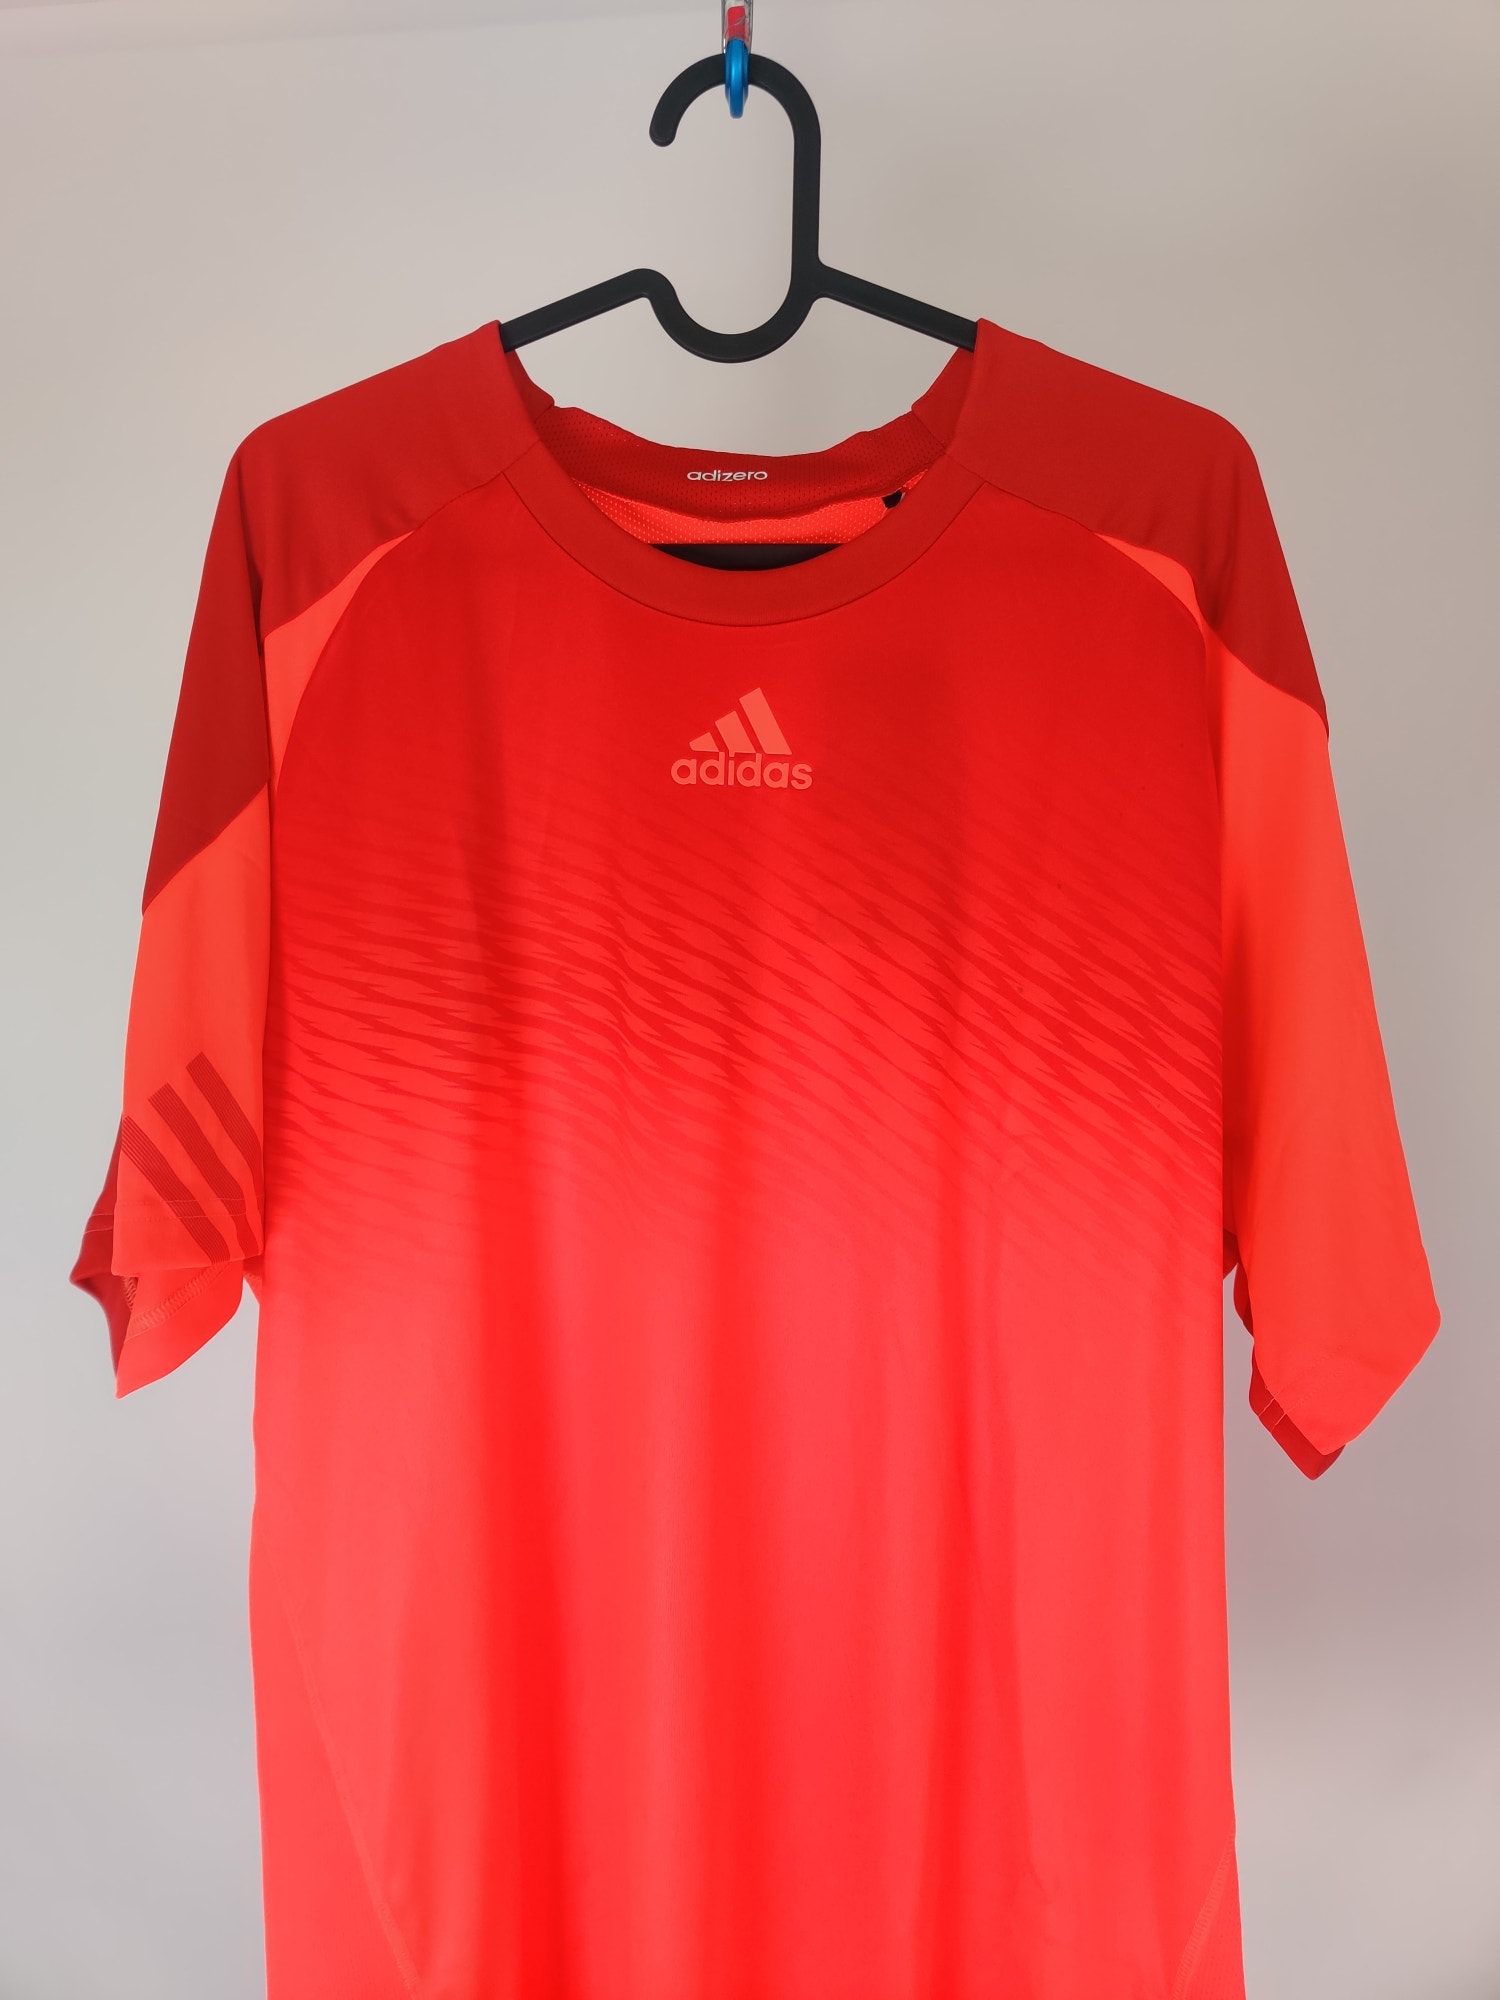 (V) adidas Adizero Mens Running T-Shirt Lightweight ORANGE Fitness Top - Picture 3 of 9